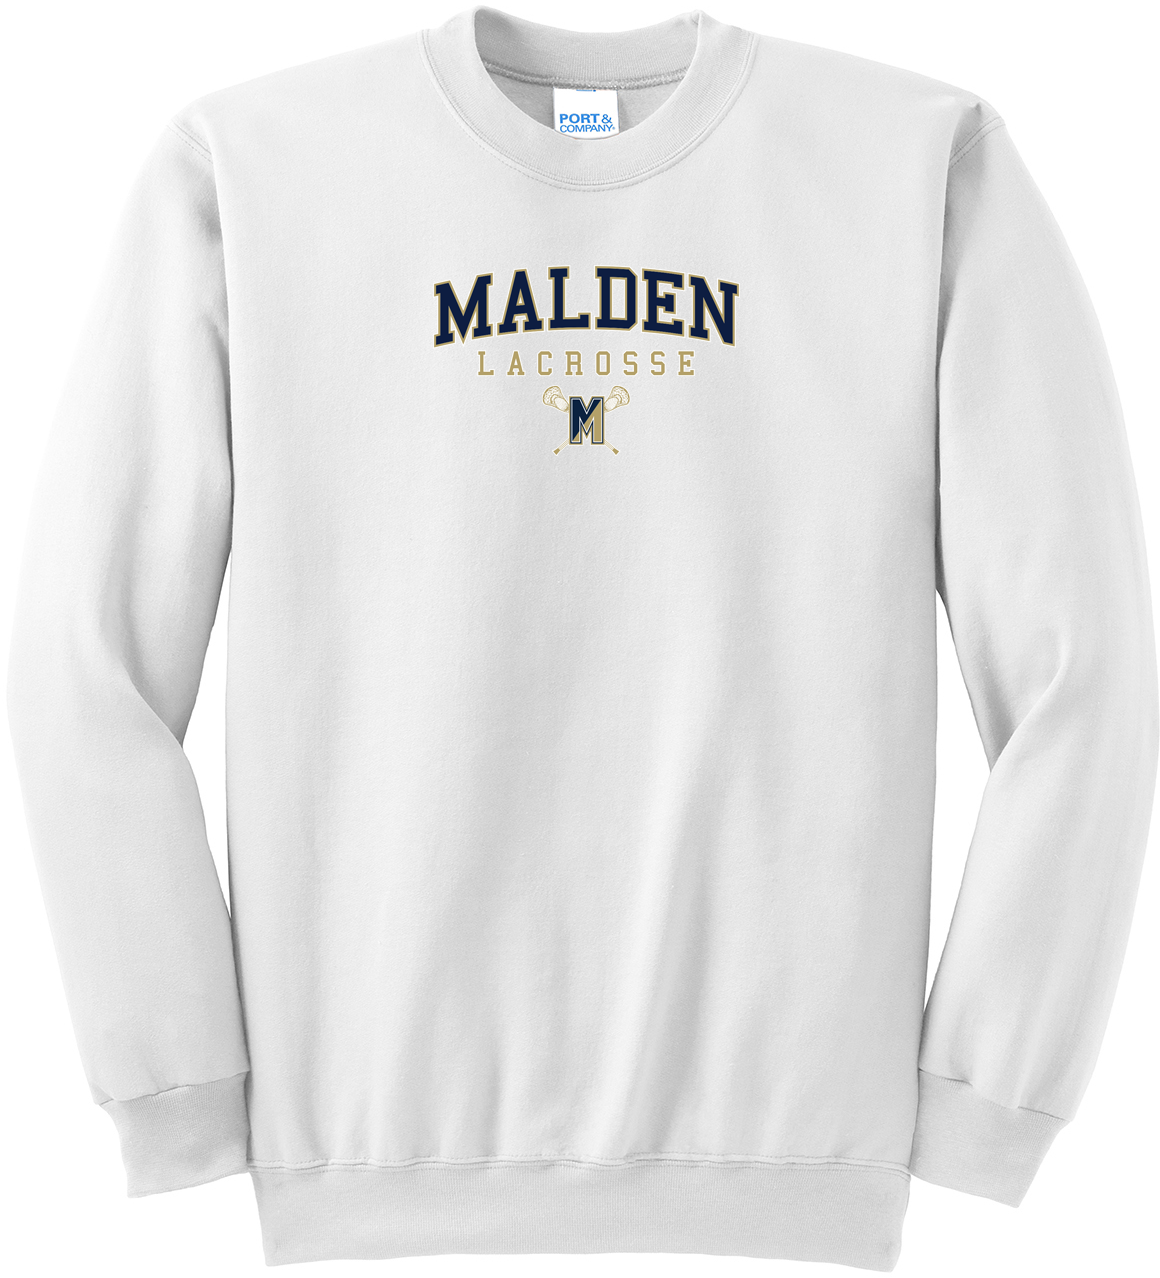 Malden Lacrosse Crew Neck Sweater